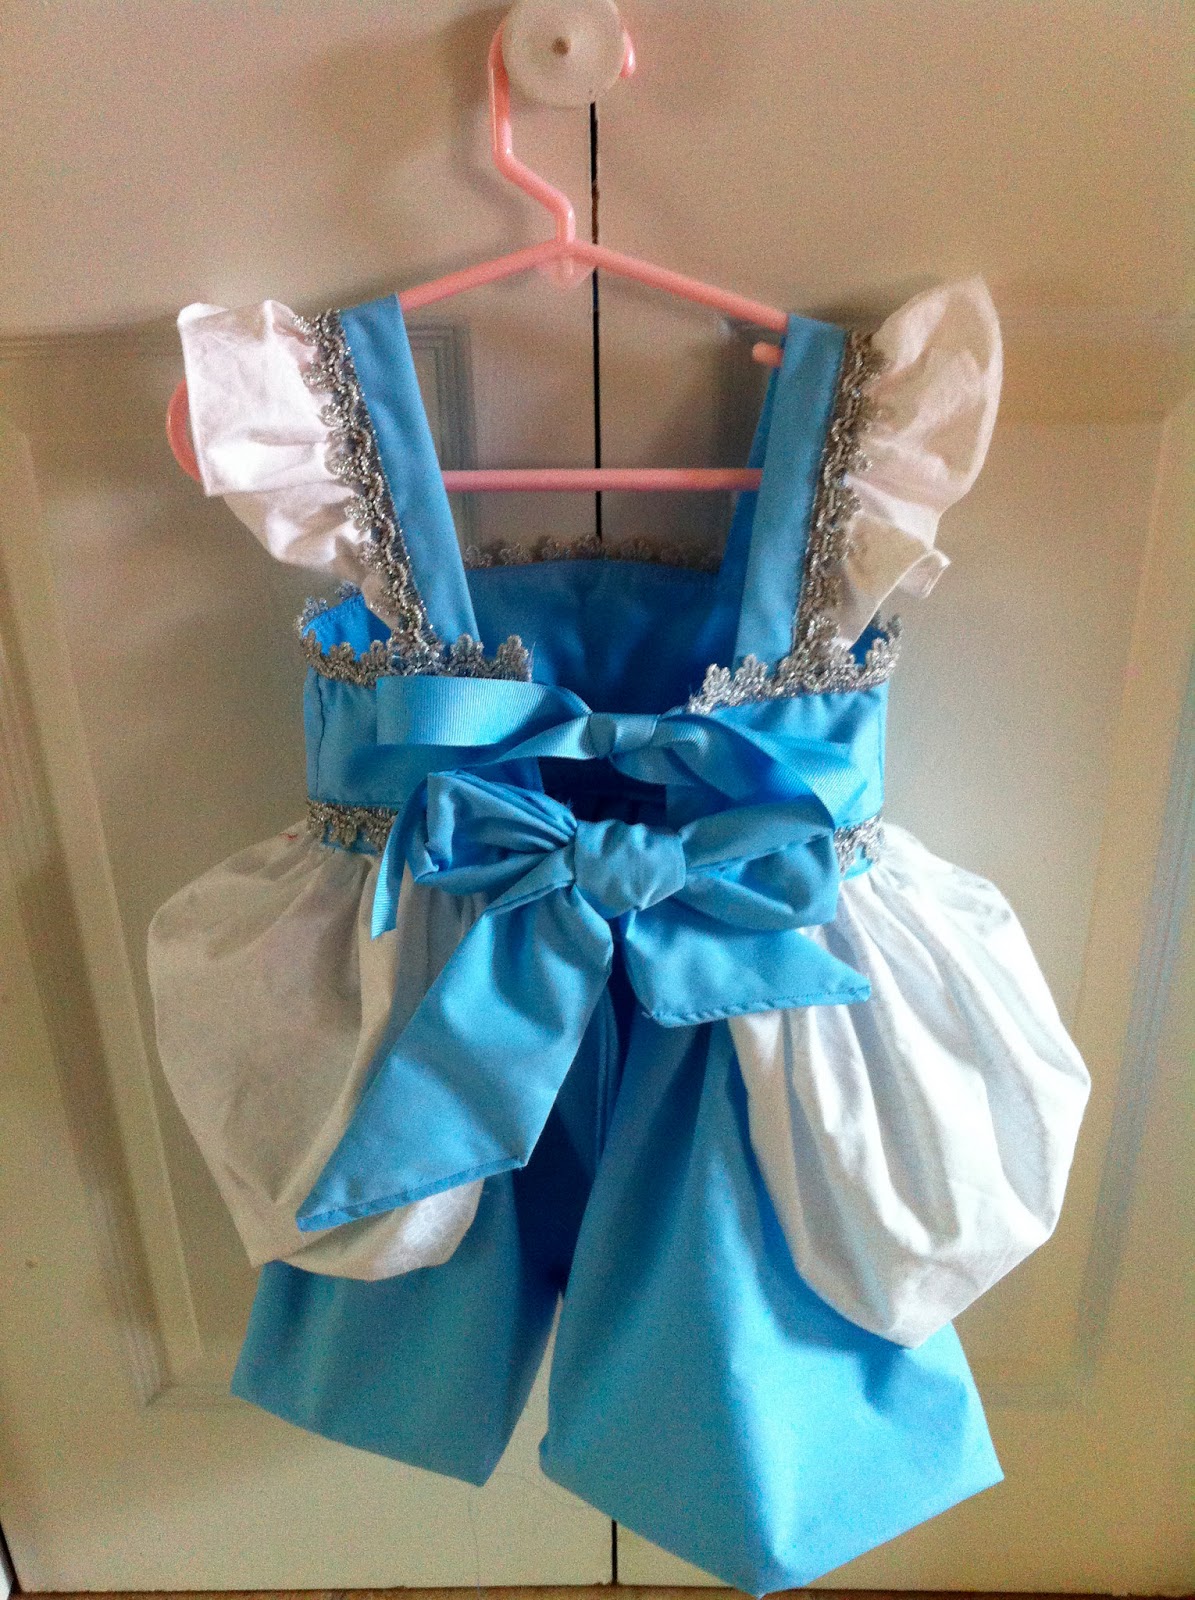 Disney Rain or Shine! : Disney Project: Sewing Cinderella Apron Dress